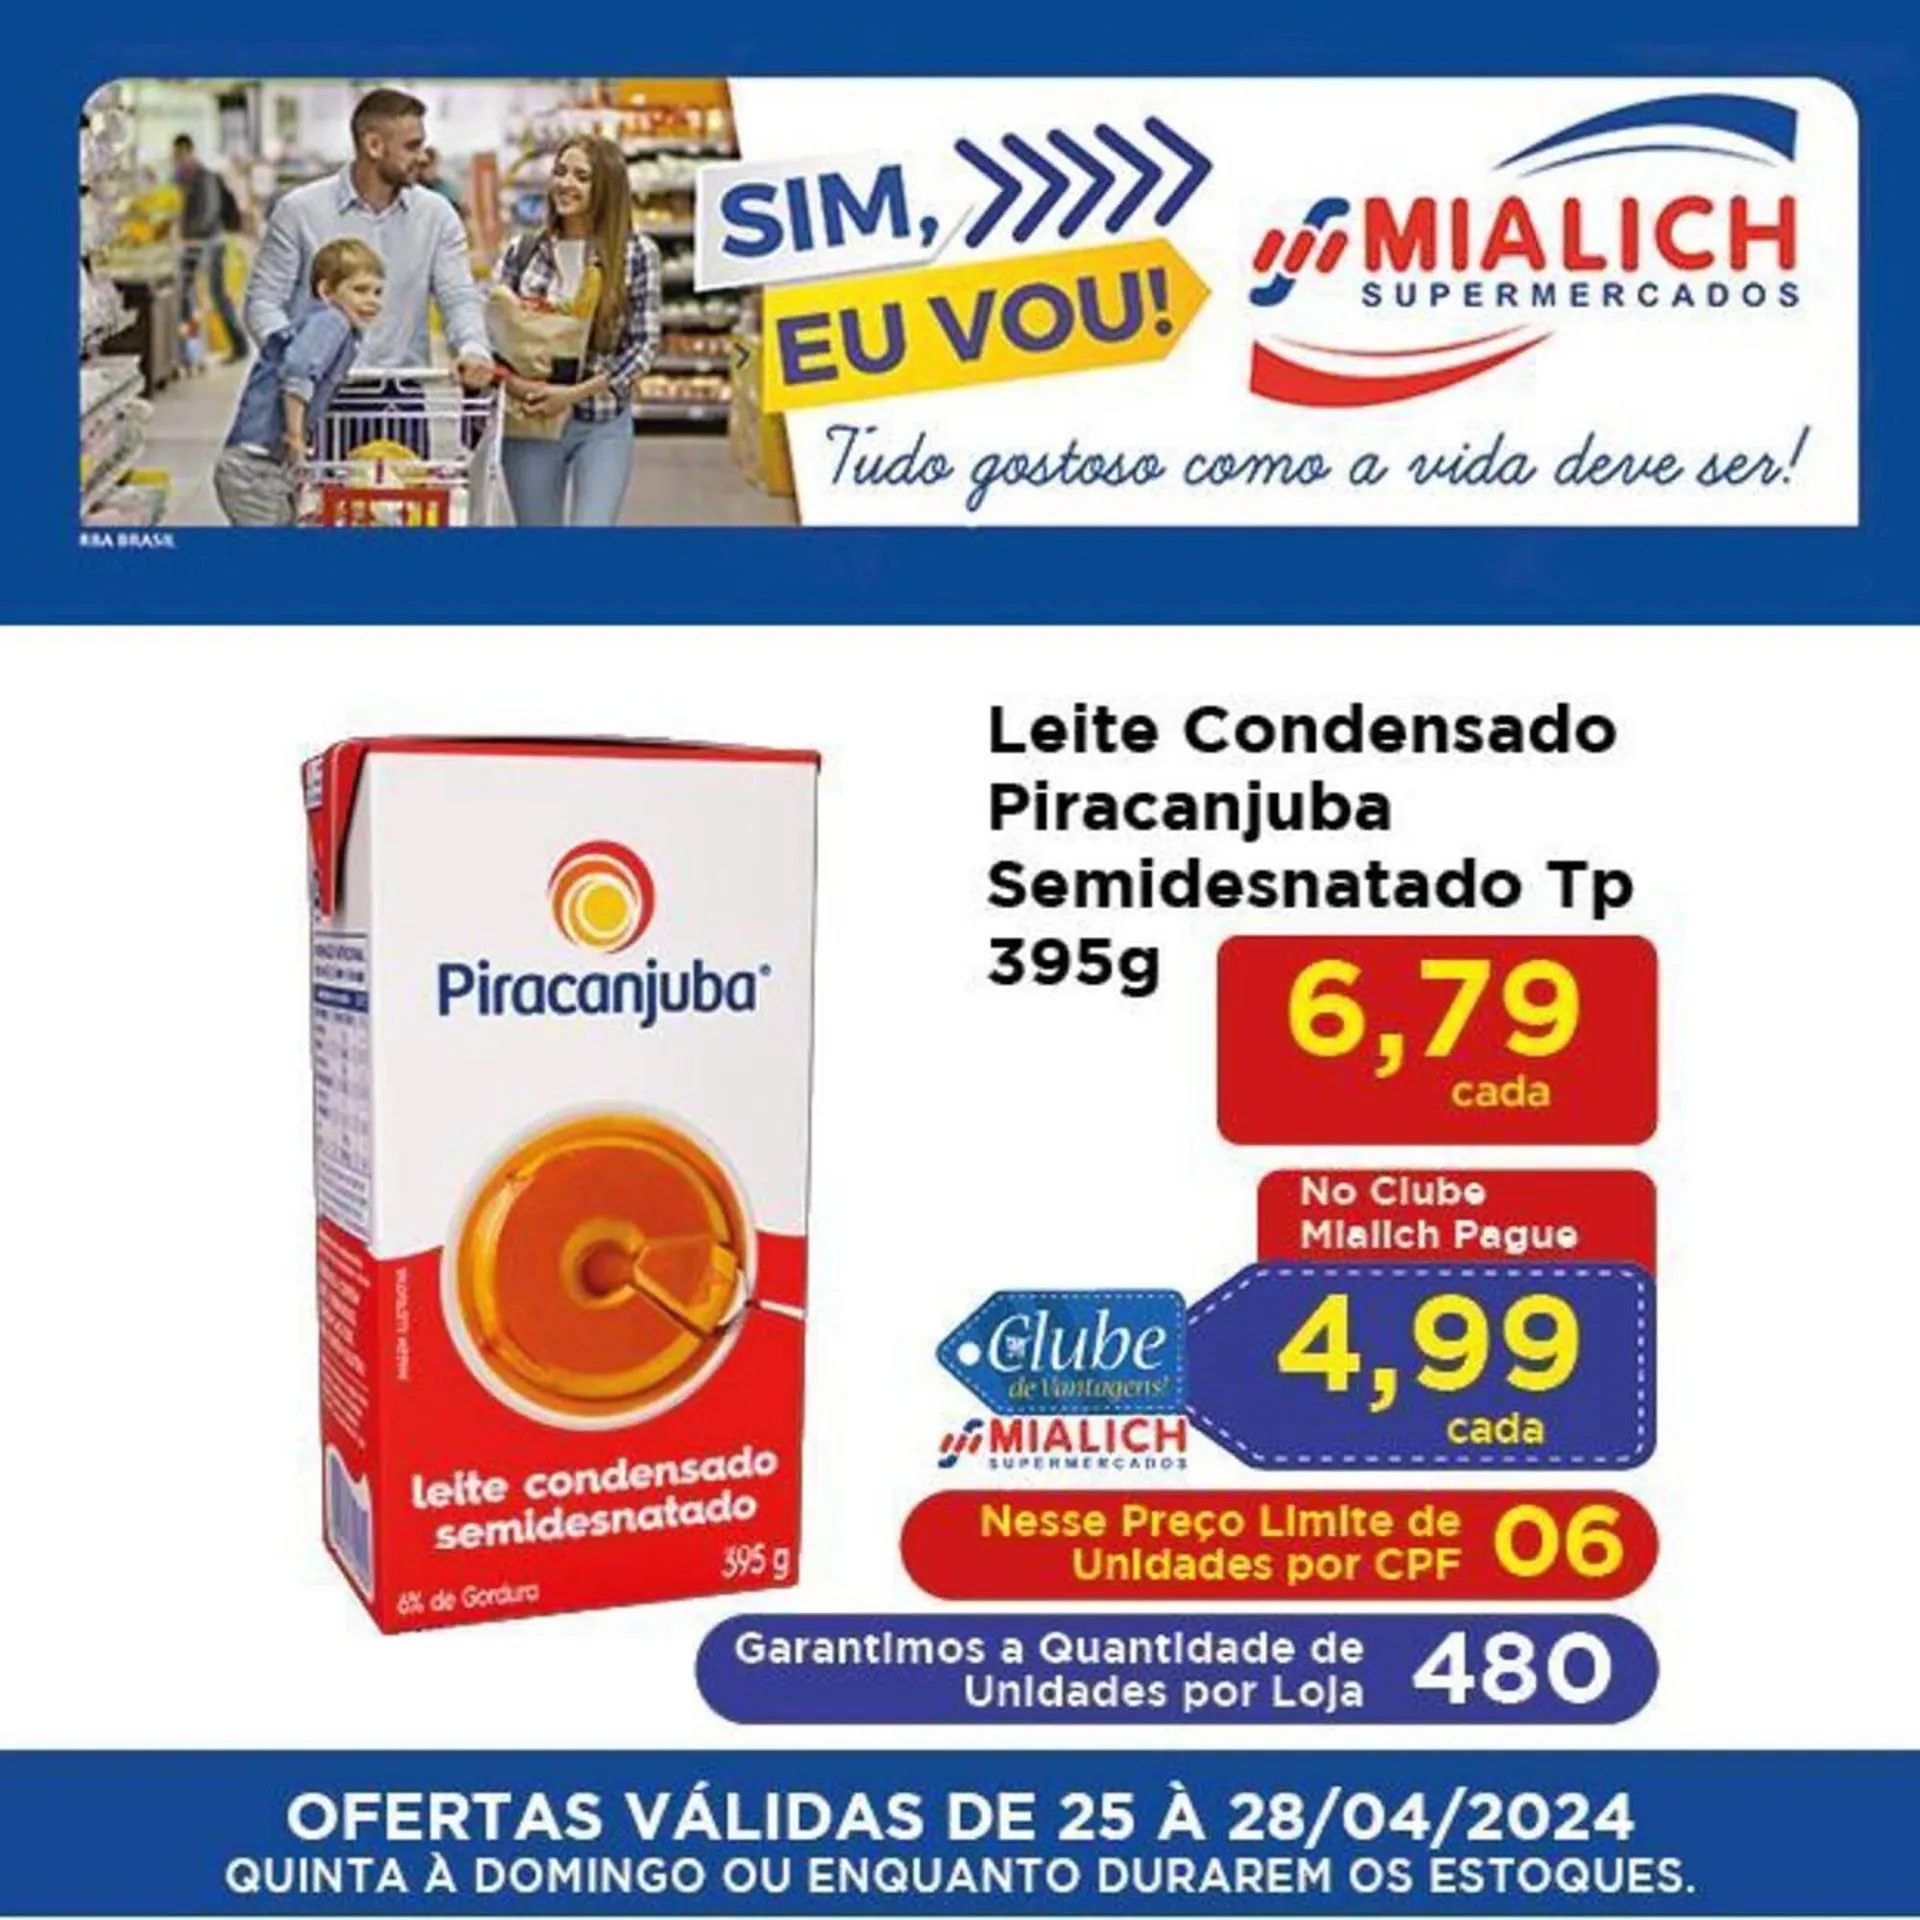 Catálogo Mialich Supermercados - 7